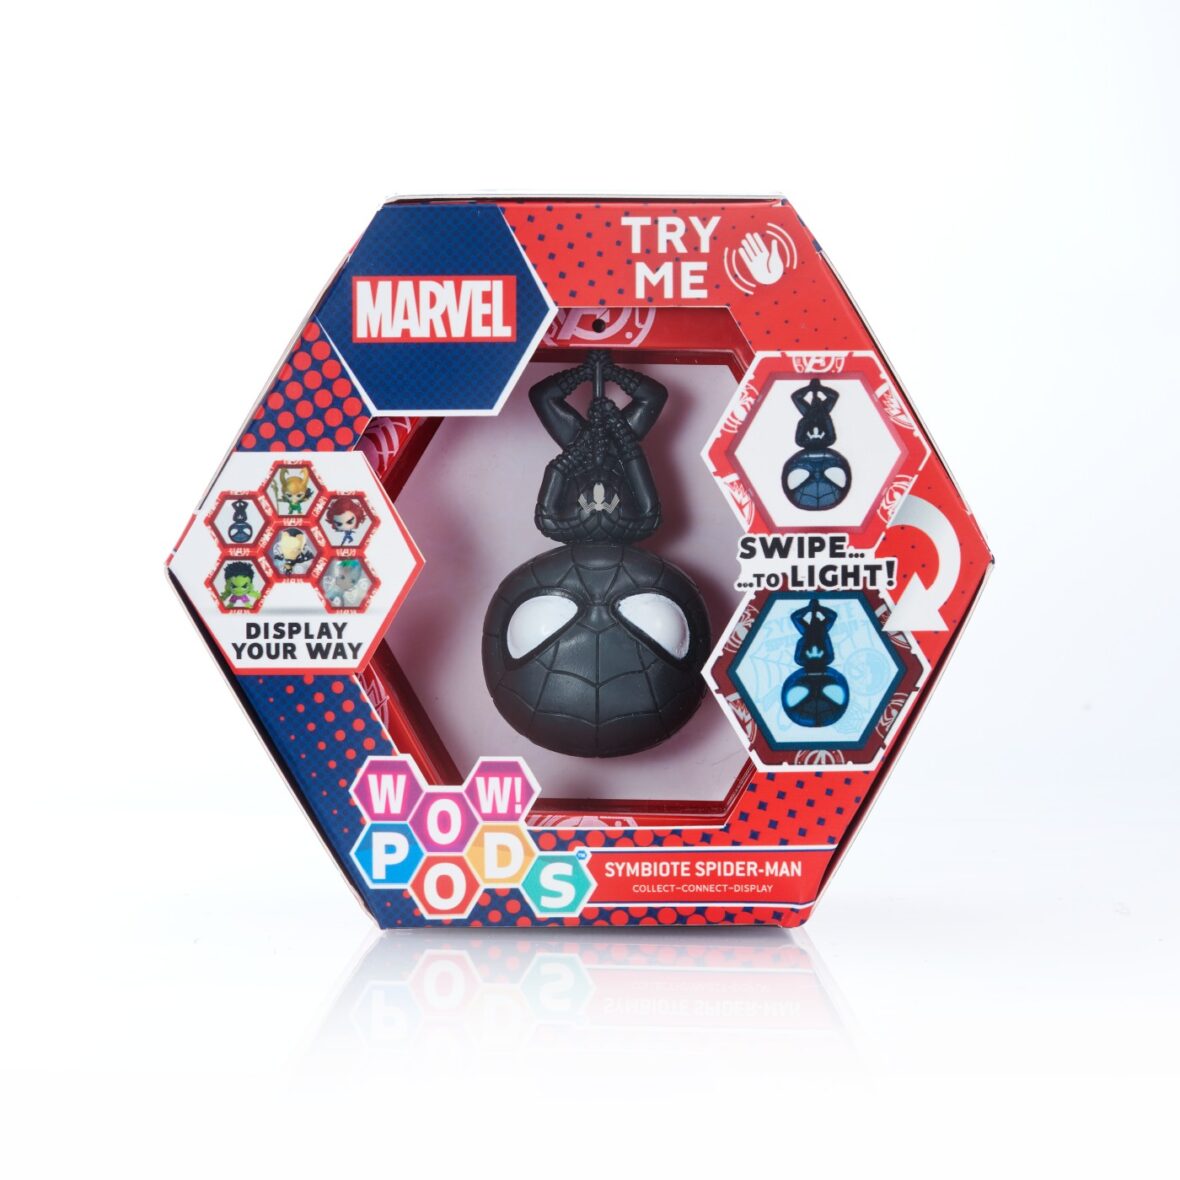 Wow! Pods – Marvel Symbiote Spiderman